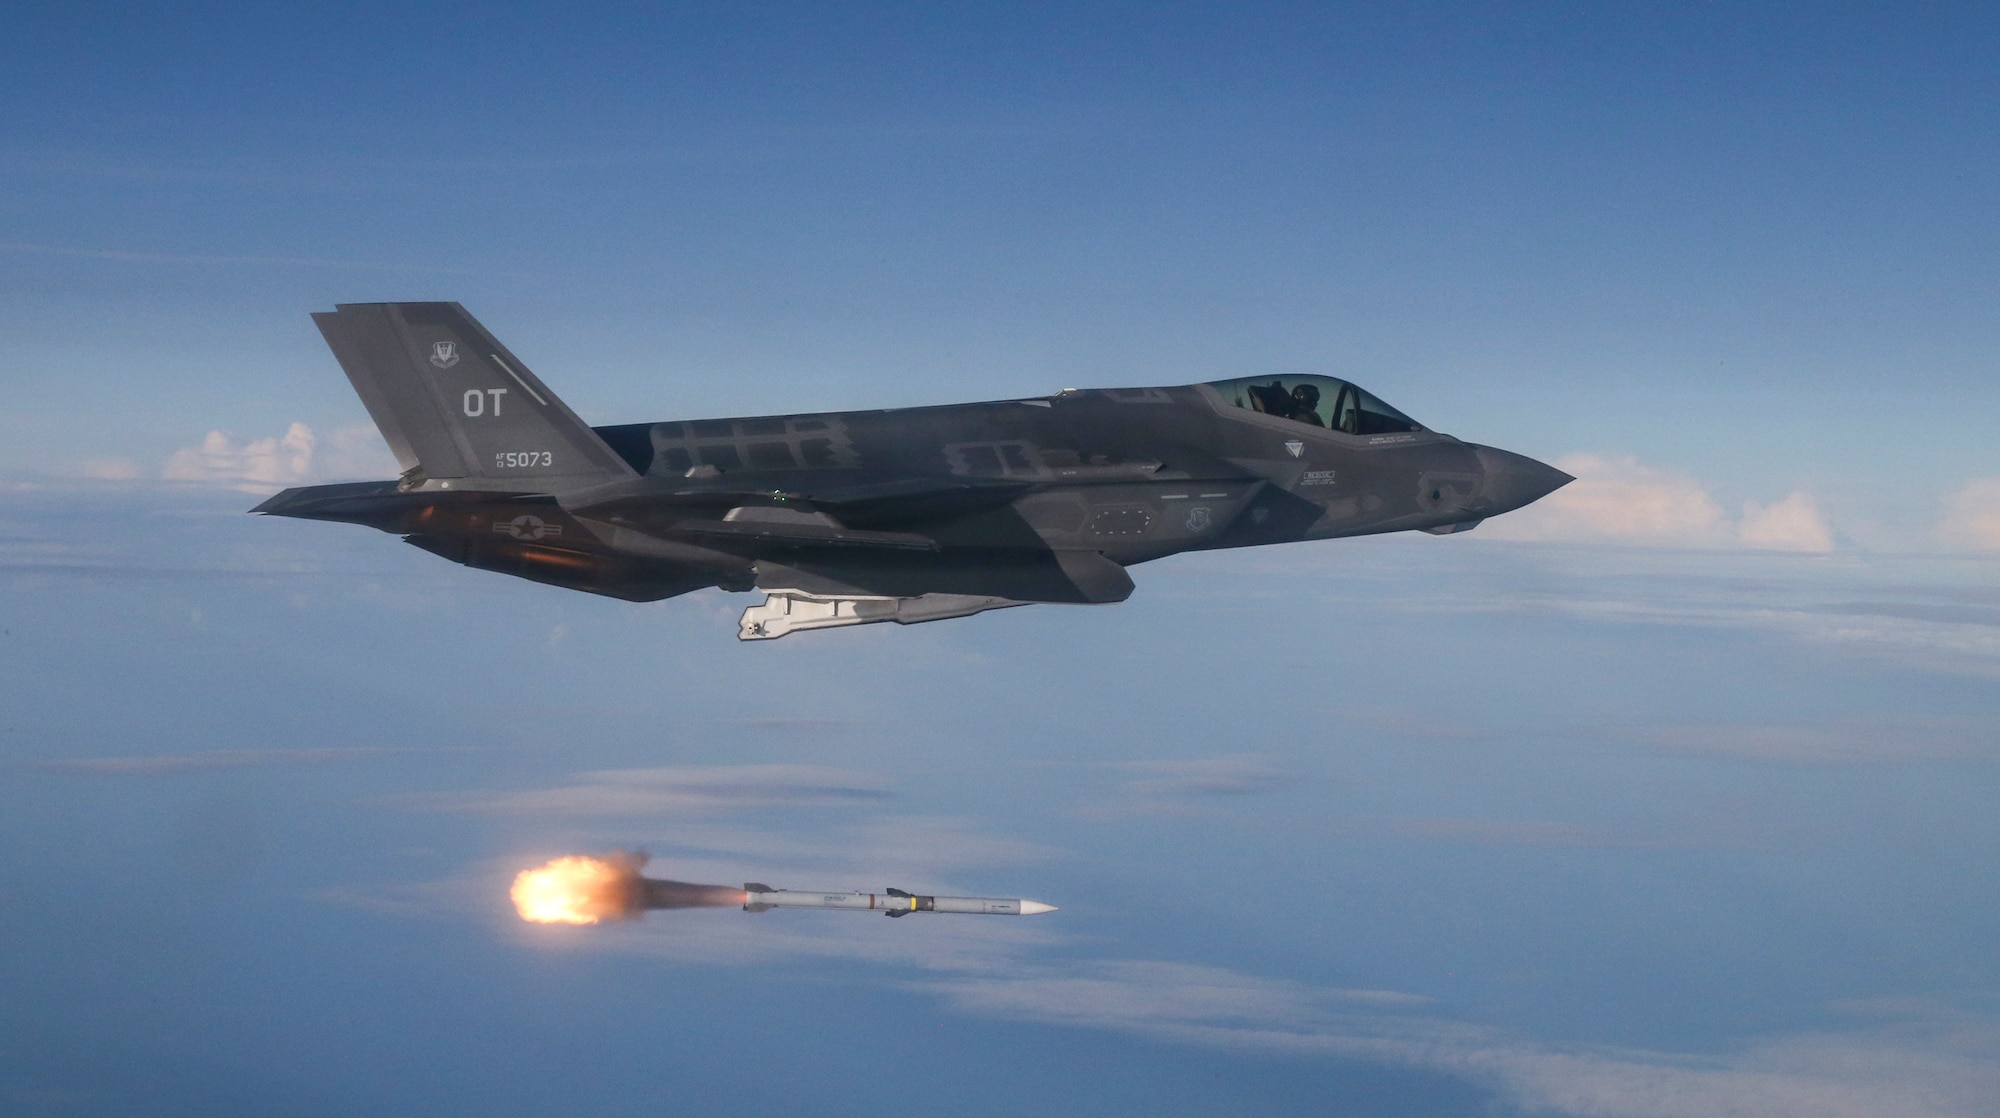 F-35A Lightning II released AIM-120 AMRAAM and AIM-9X missiles